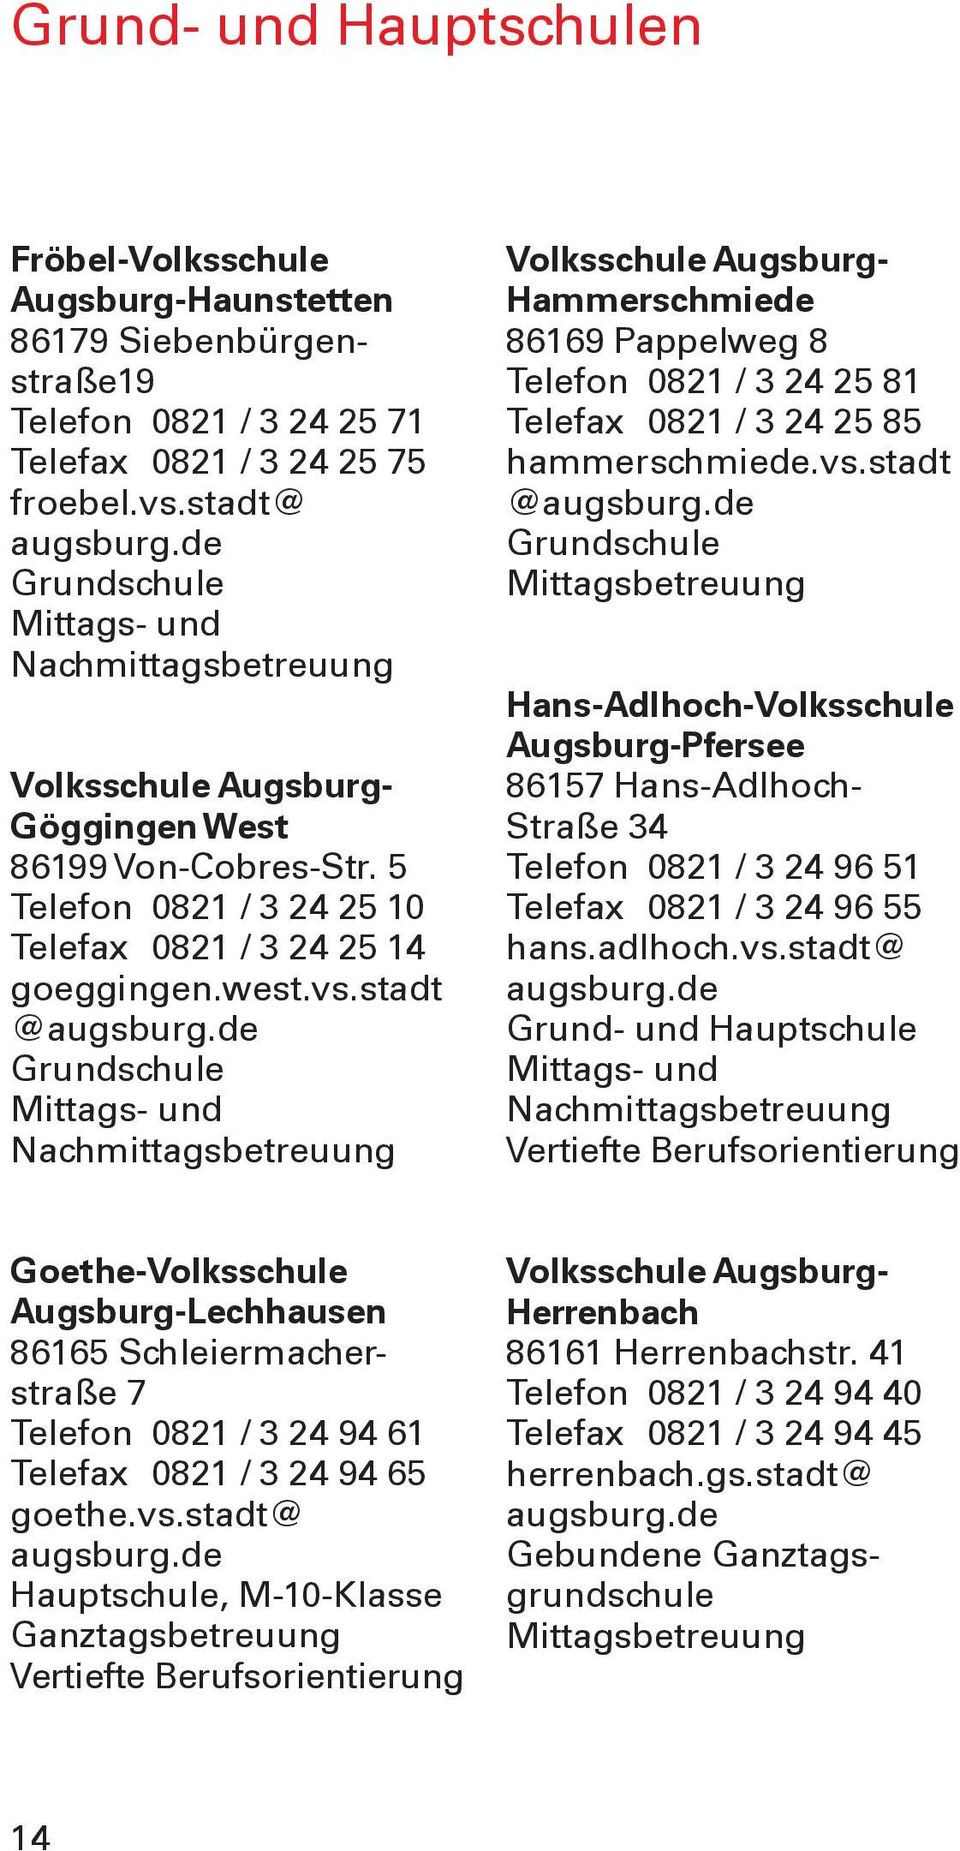 stadt @ Grundschule Mittags- und Nachmittagsbetreuung Volksschule Augsburg- Hammerschmiede 86169 Pappelweg 8 Telefon 0821 / 3 24 25 81 Telefax 0821 / 3 24 25 85 hammerschmiede.vs.